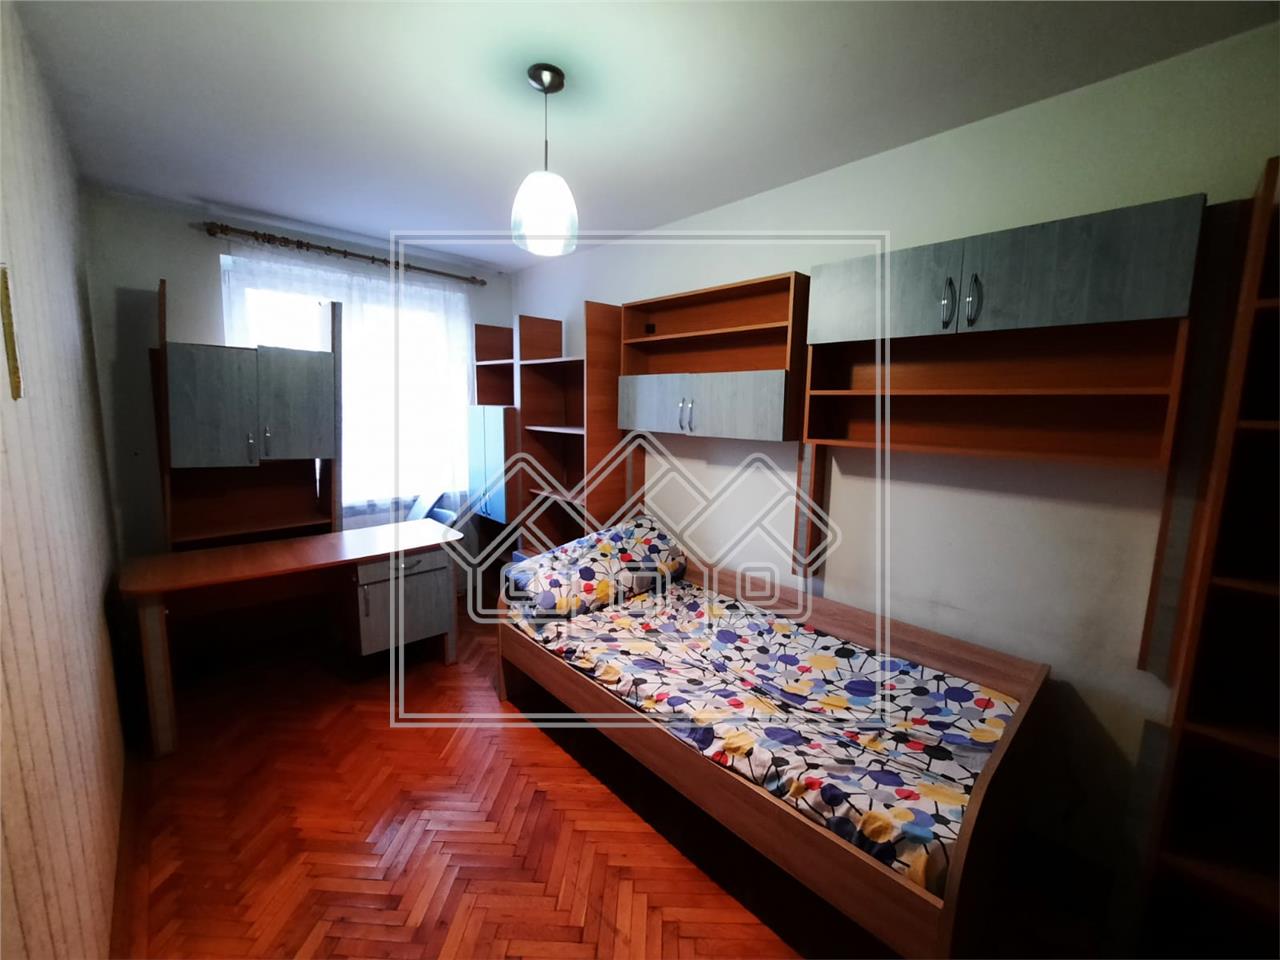 Apartment for rent in Sibiu - 3 rooms, et. 3, balcony - CEC area